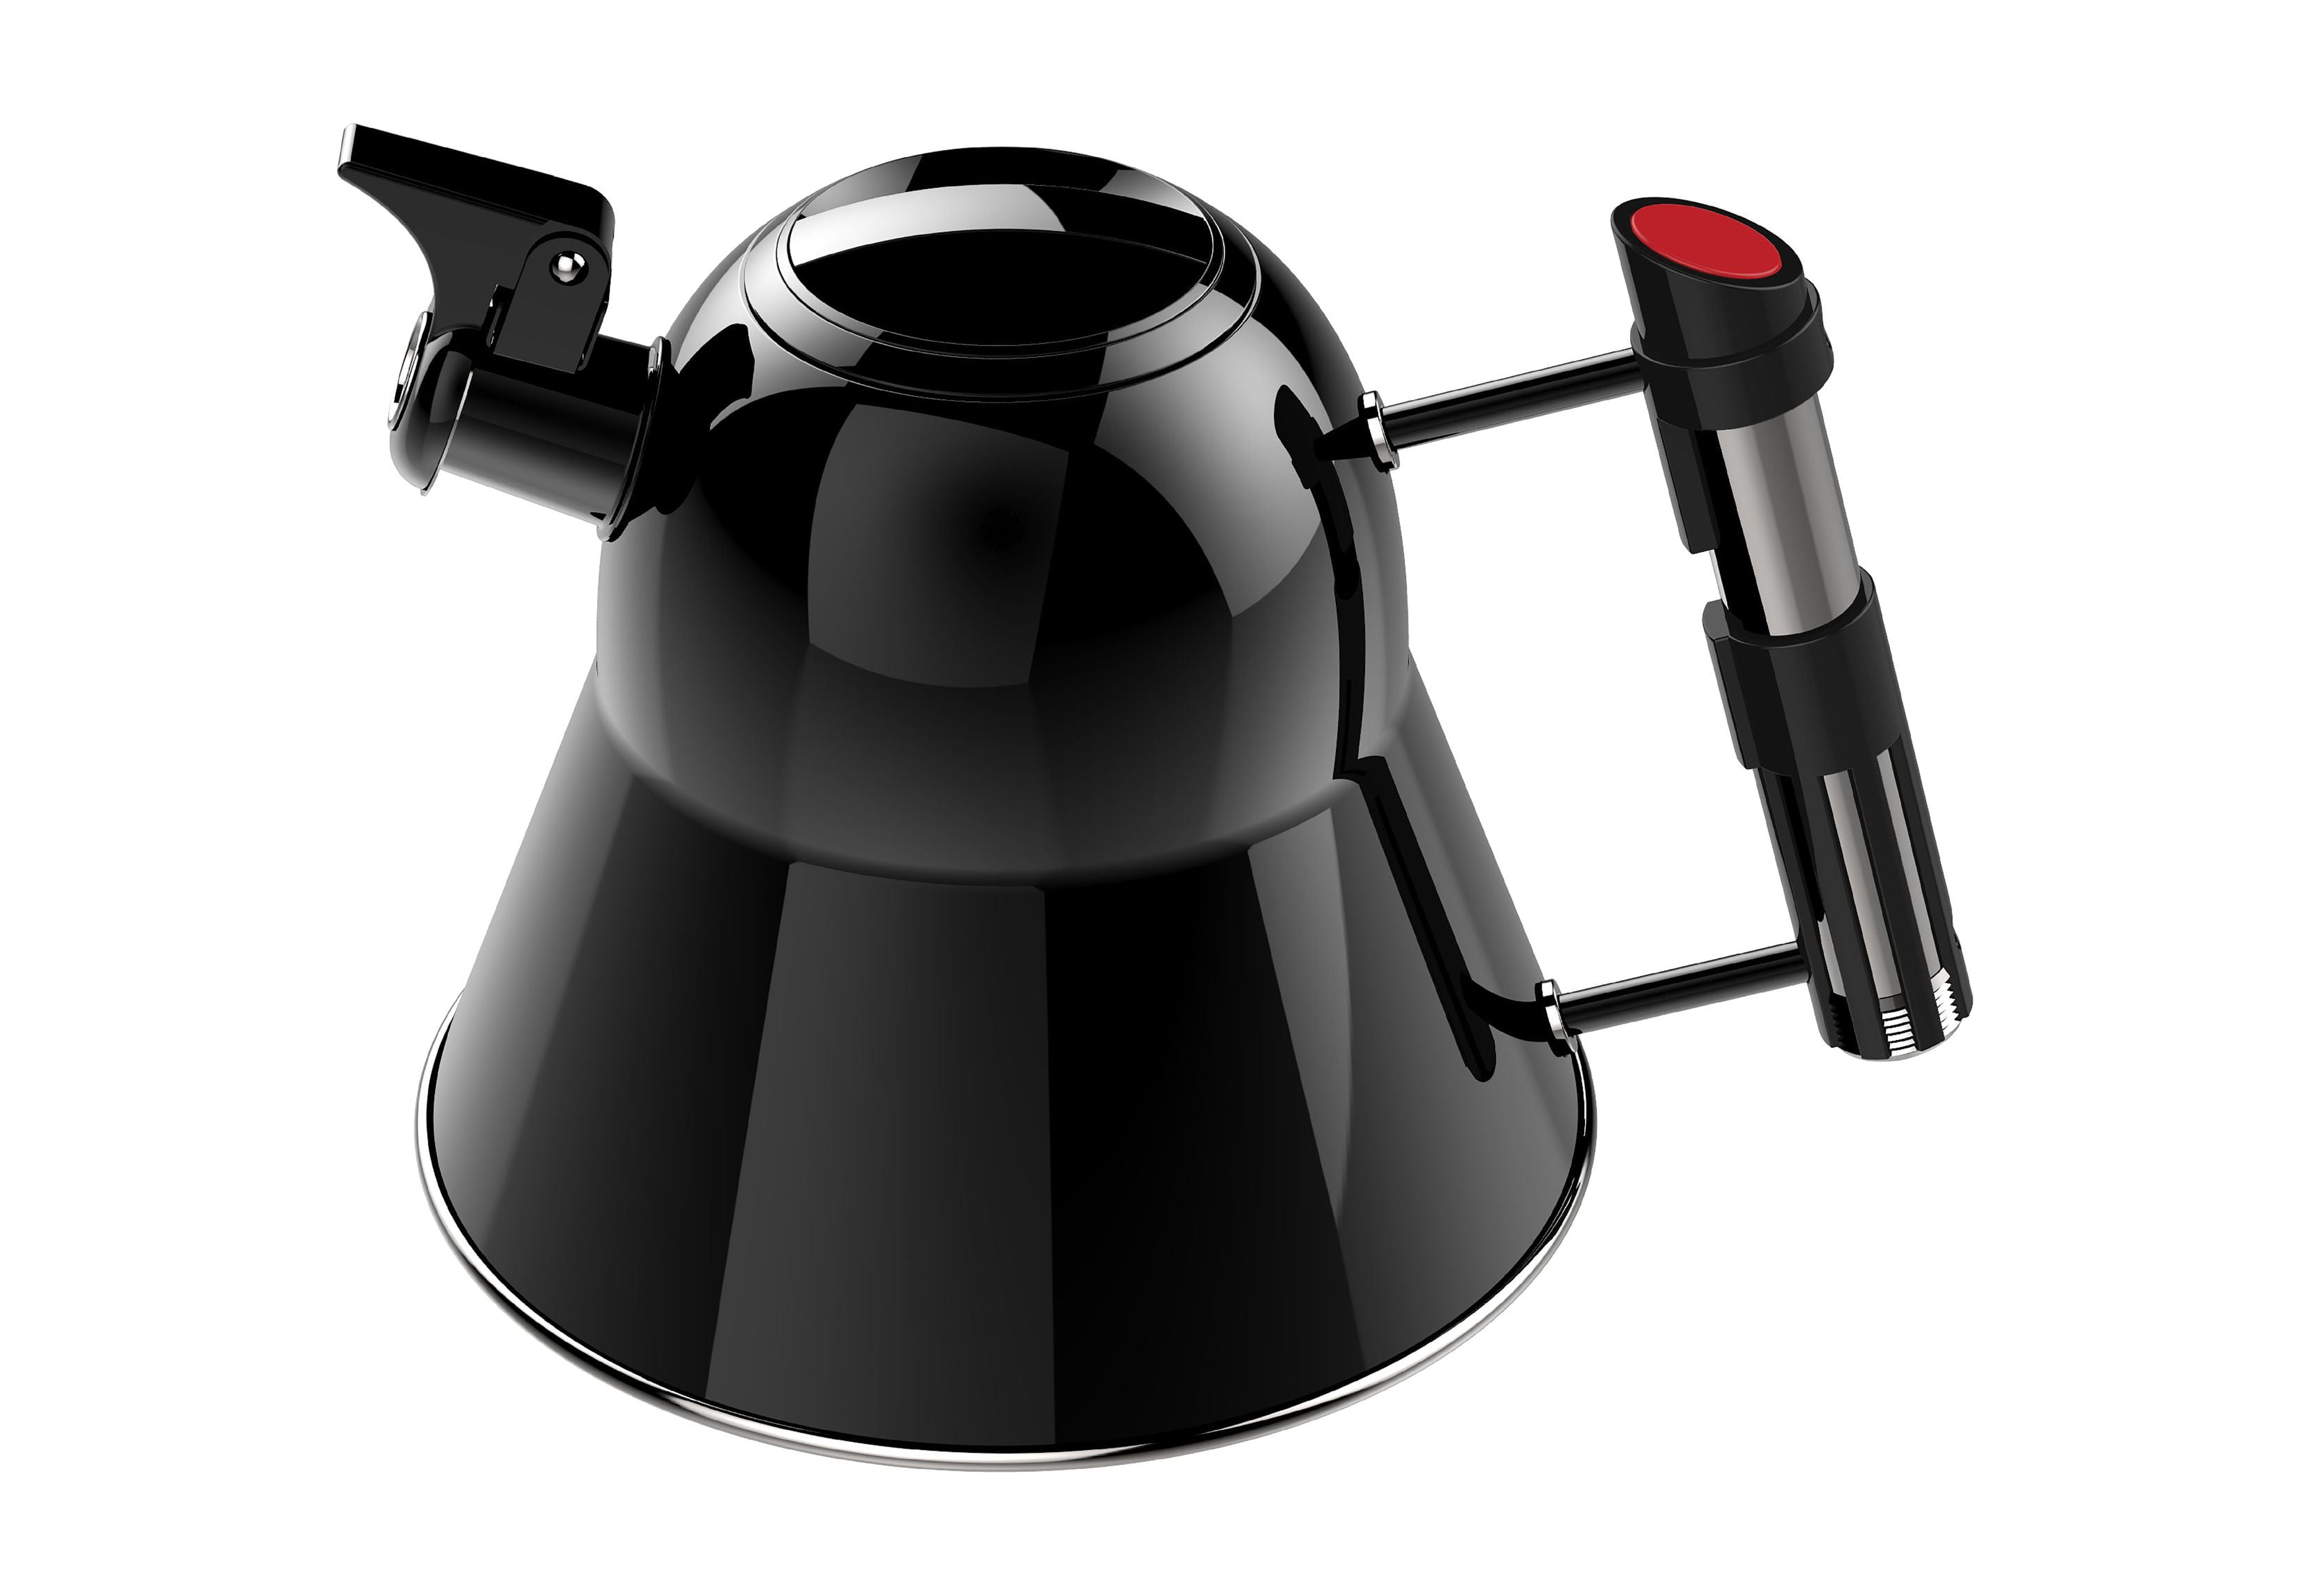 Star Wars Darth Vader Teapot Set » Gadget Flow